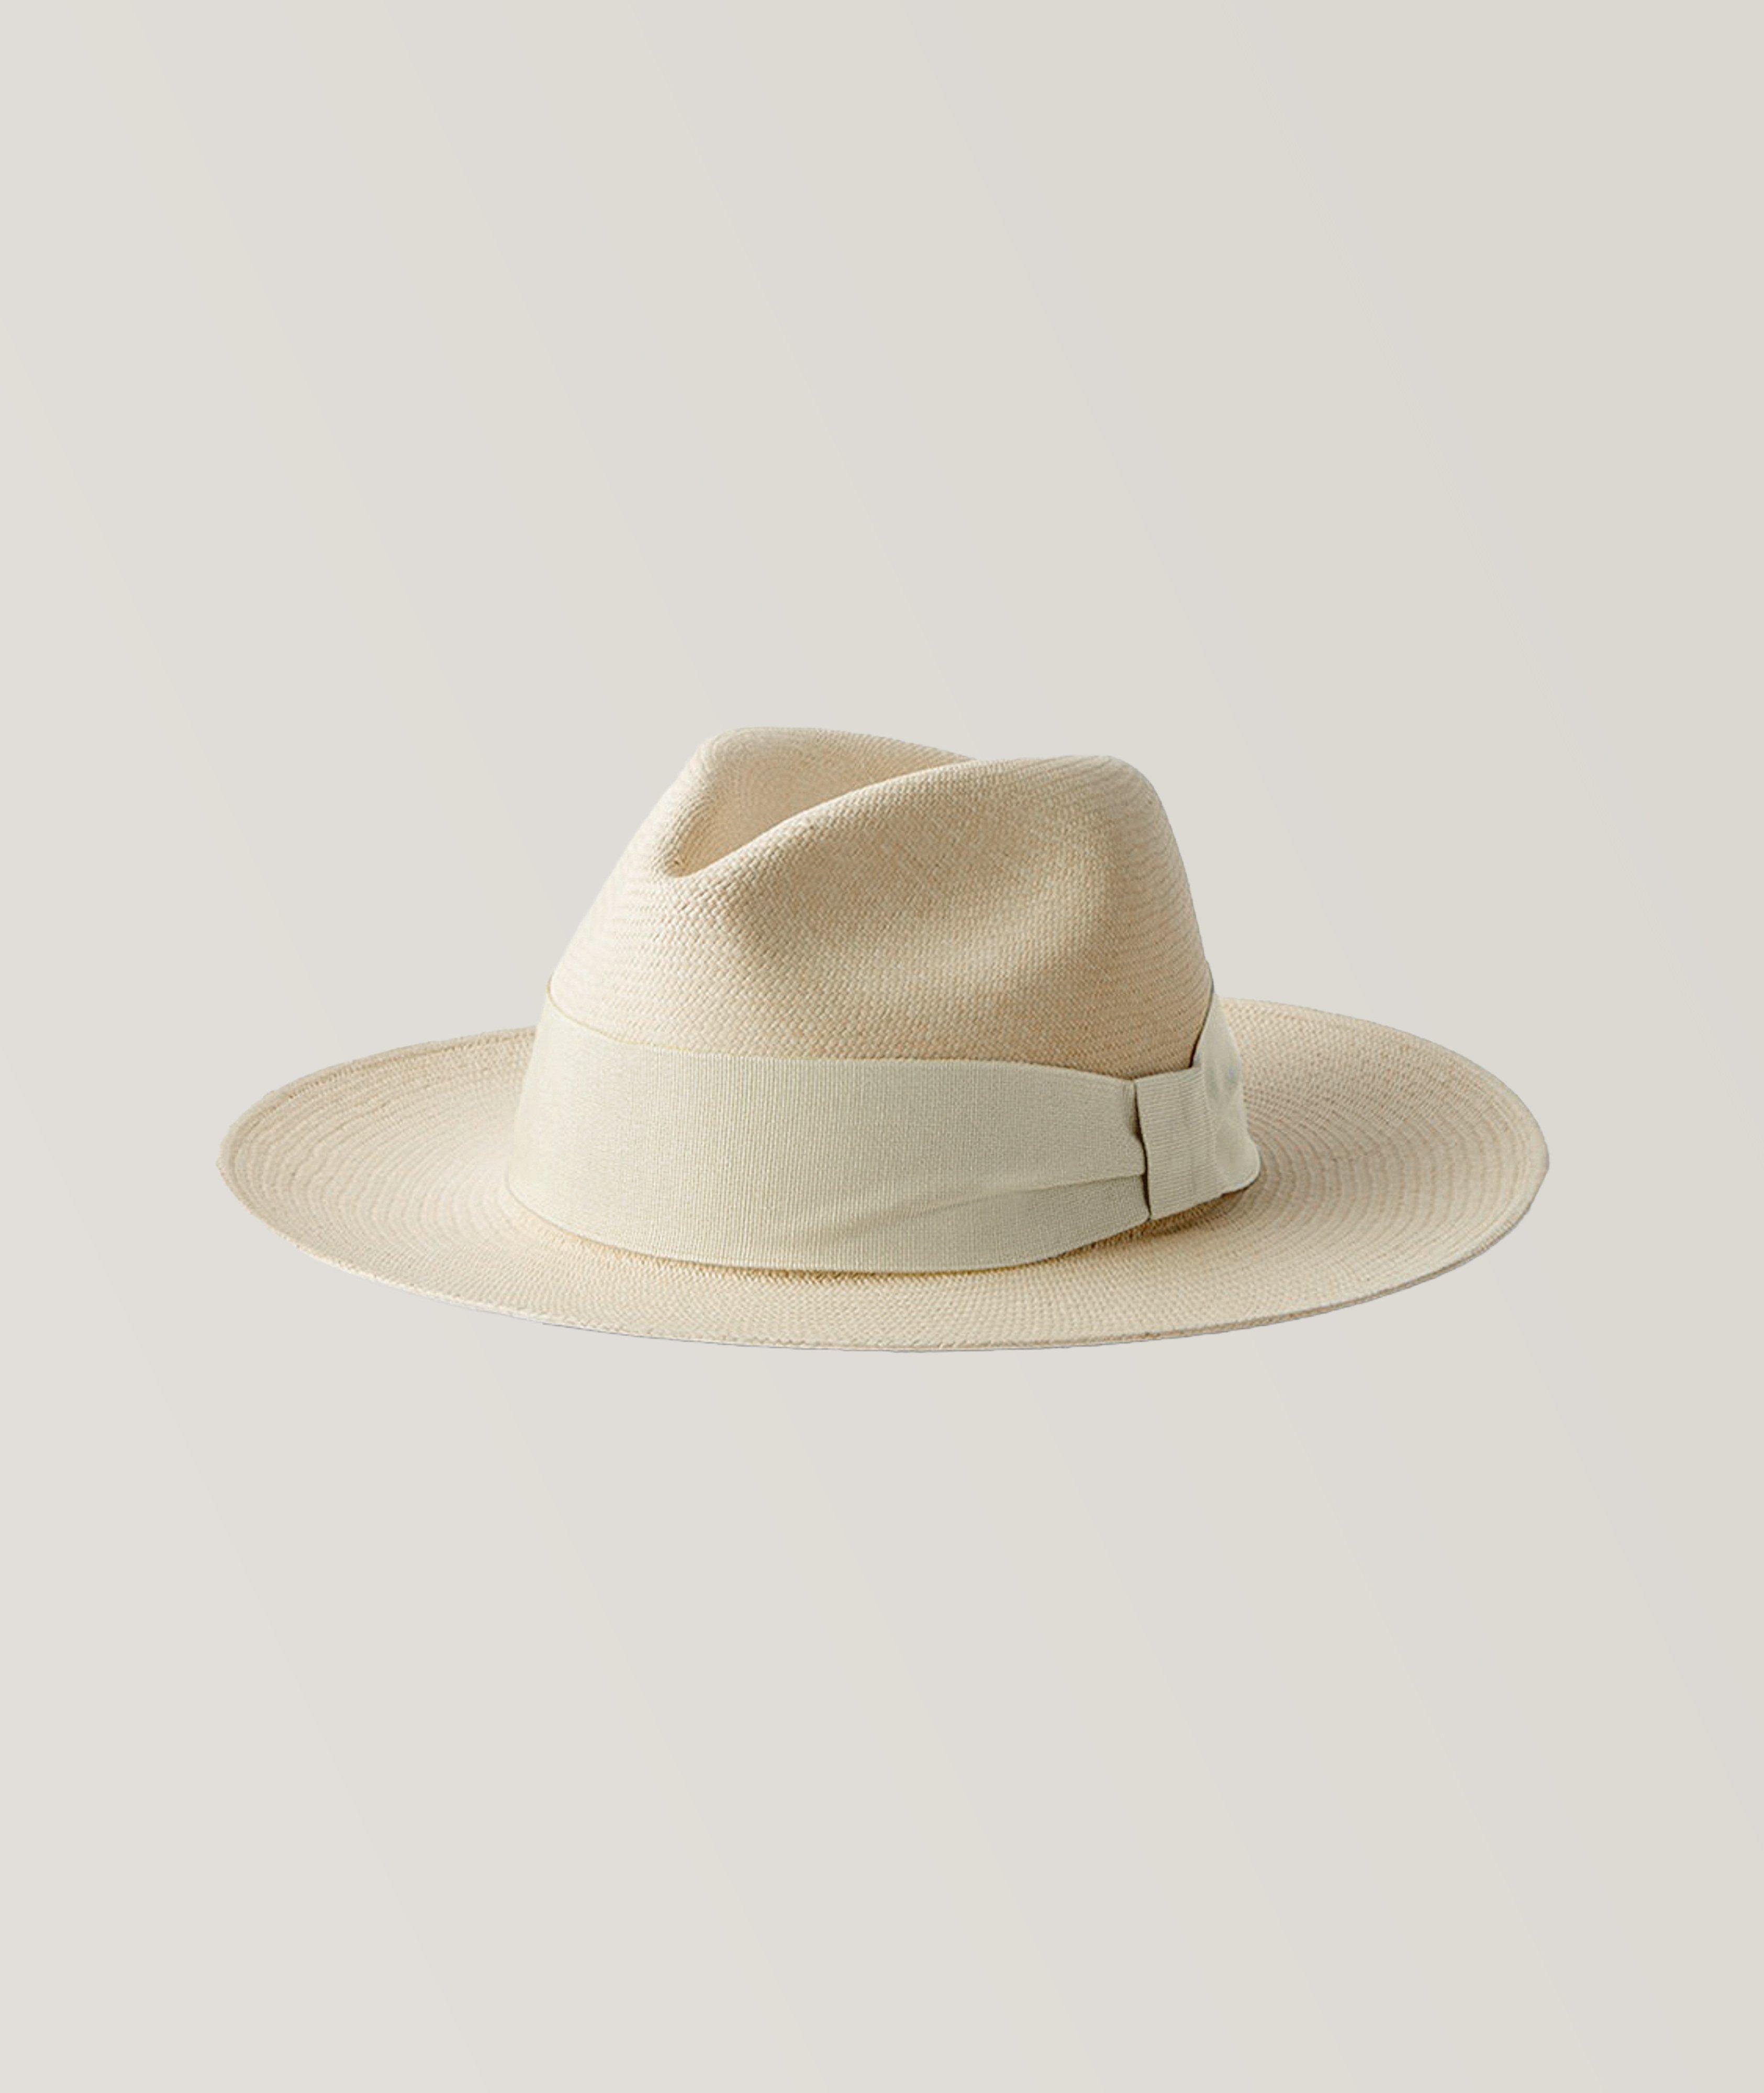 Rafael Panama Hat image 0